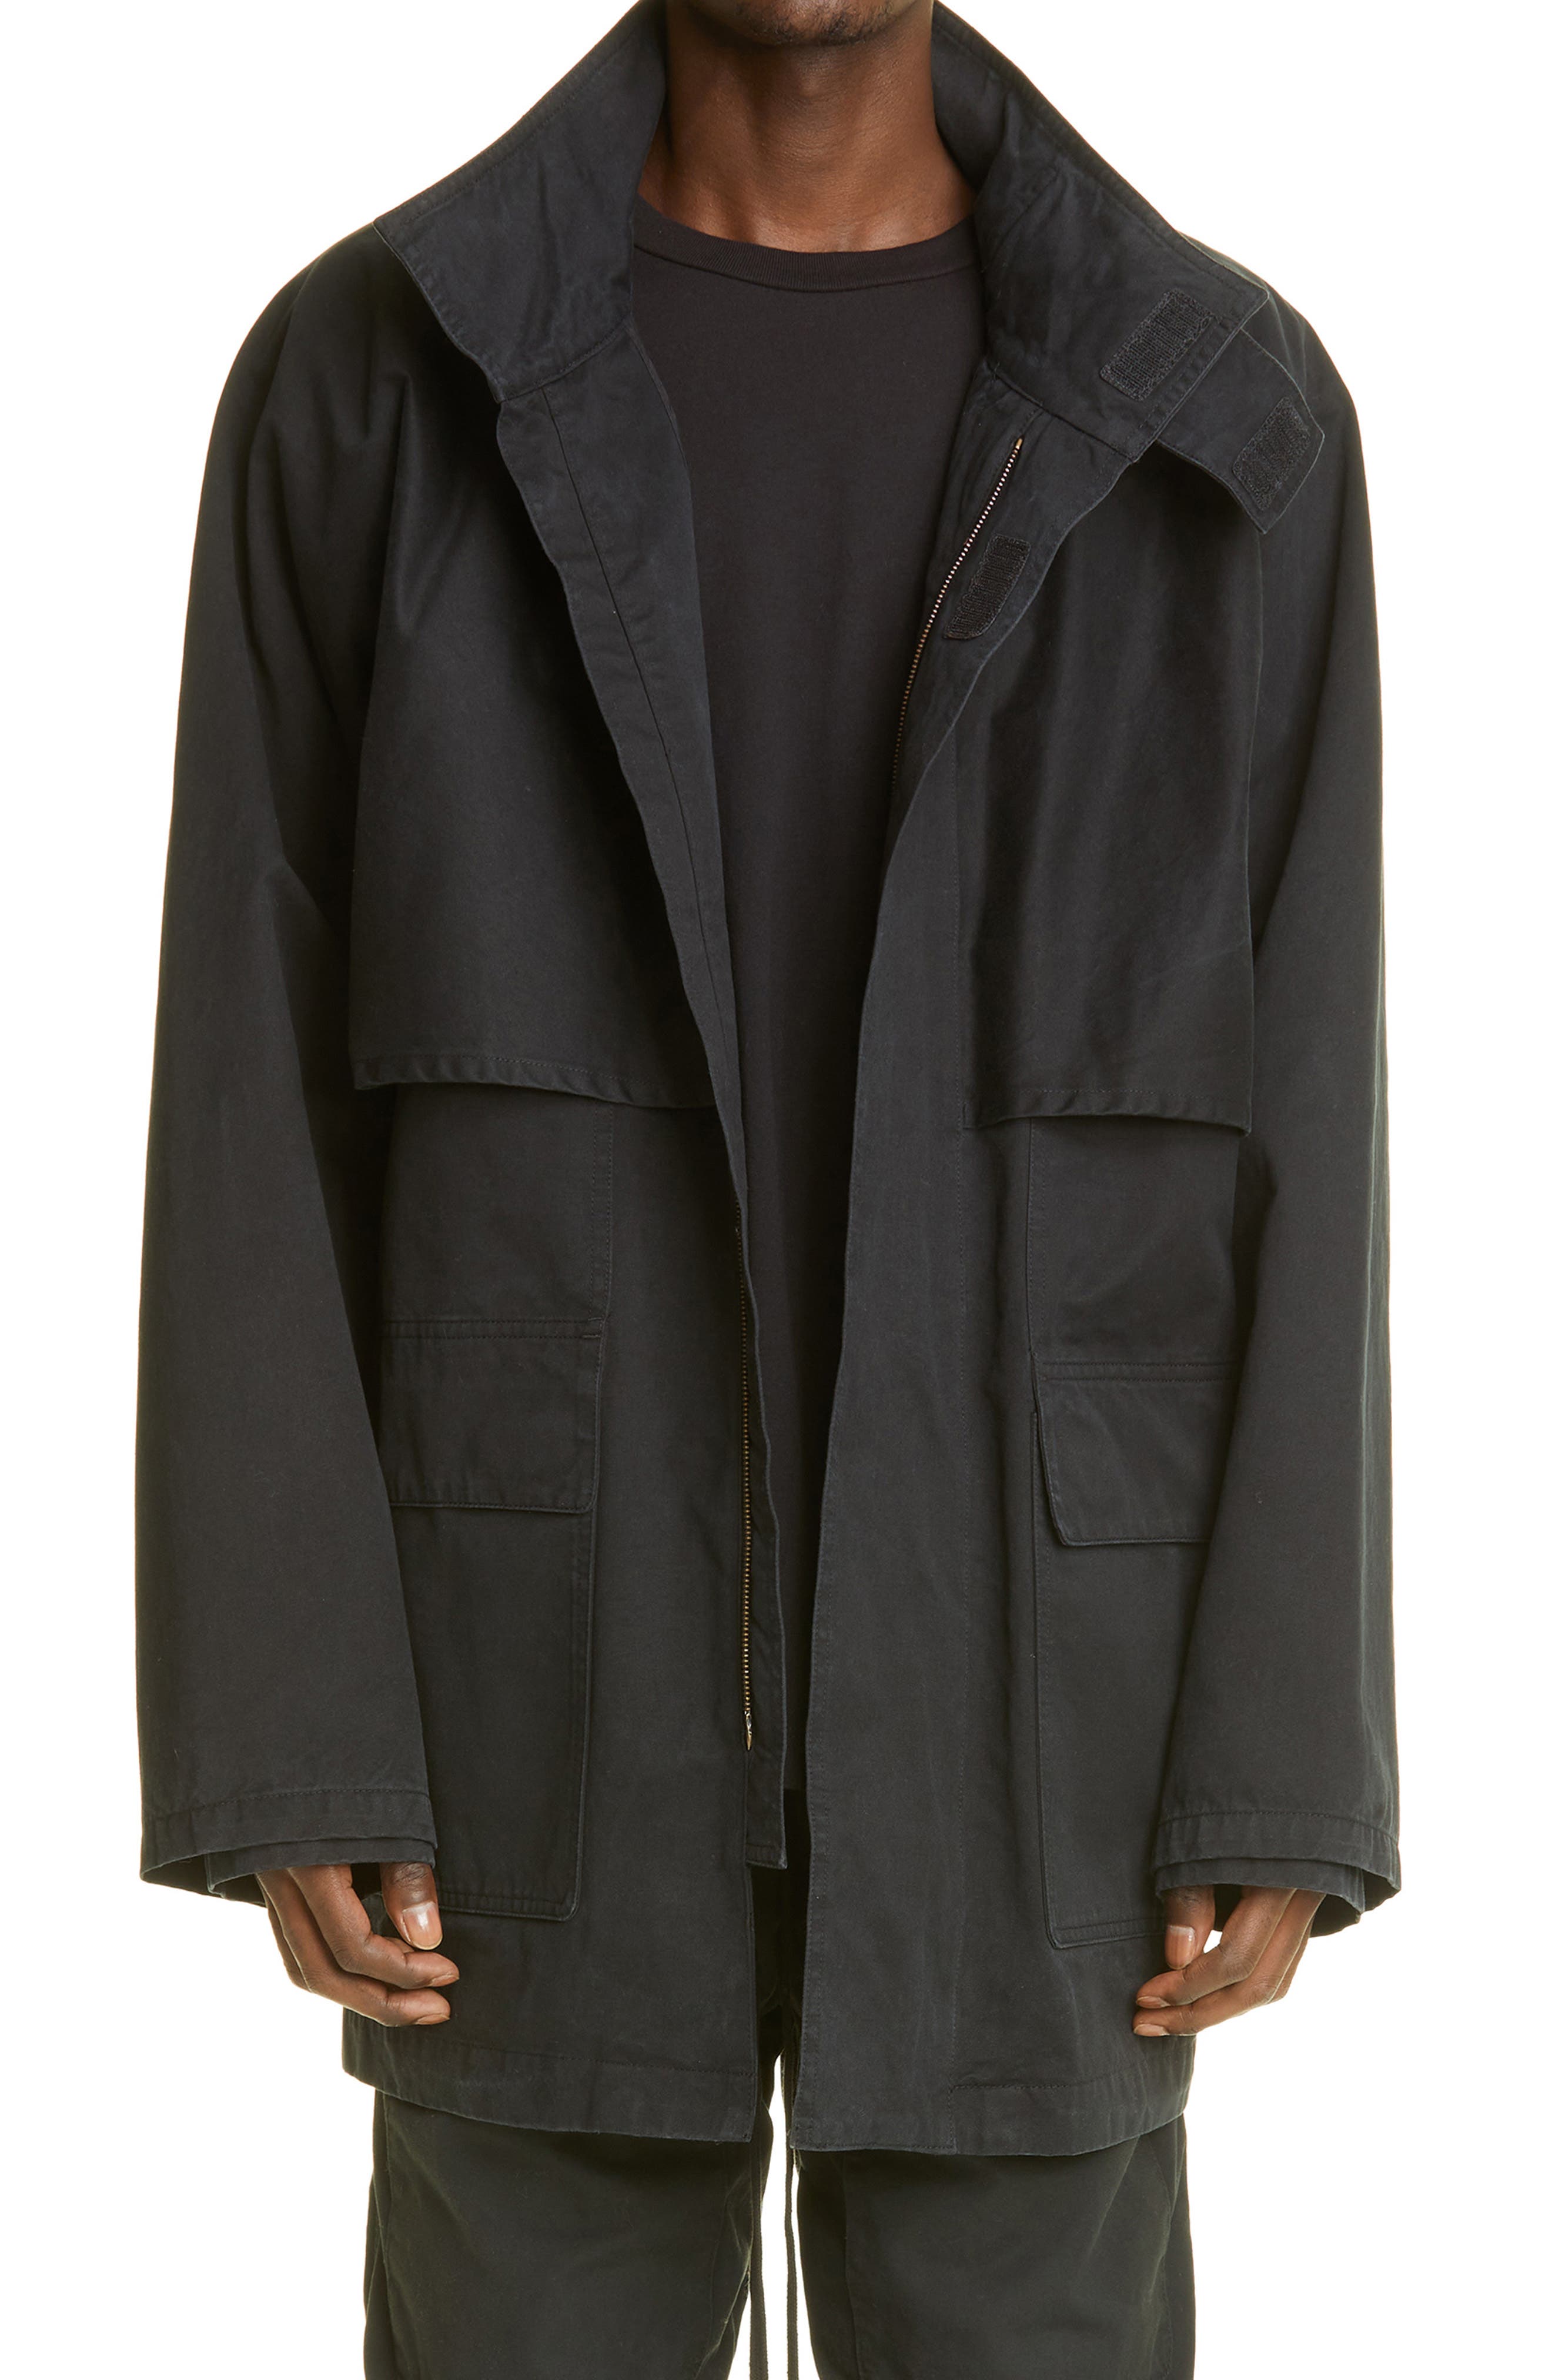 Fear of God Storm Cotton Jacket in Black at Nordstrom, Size Medium